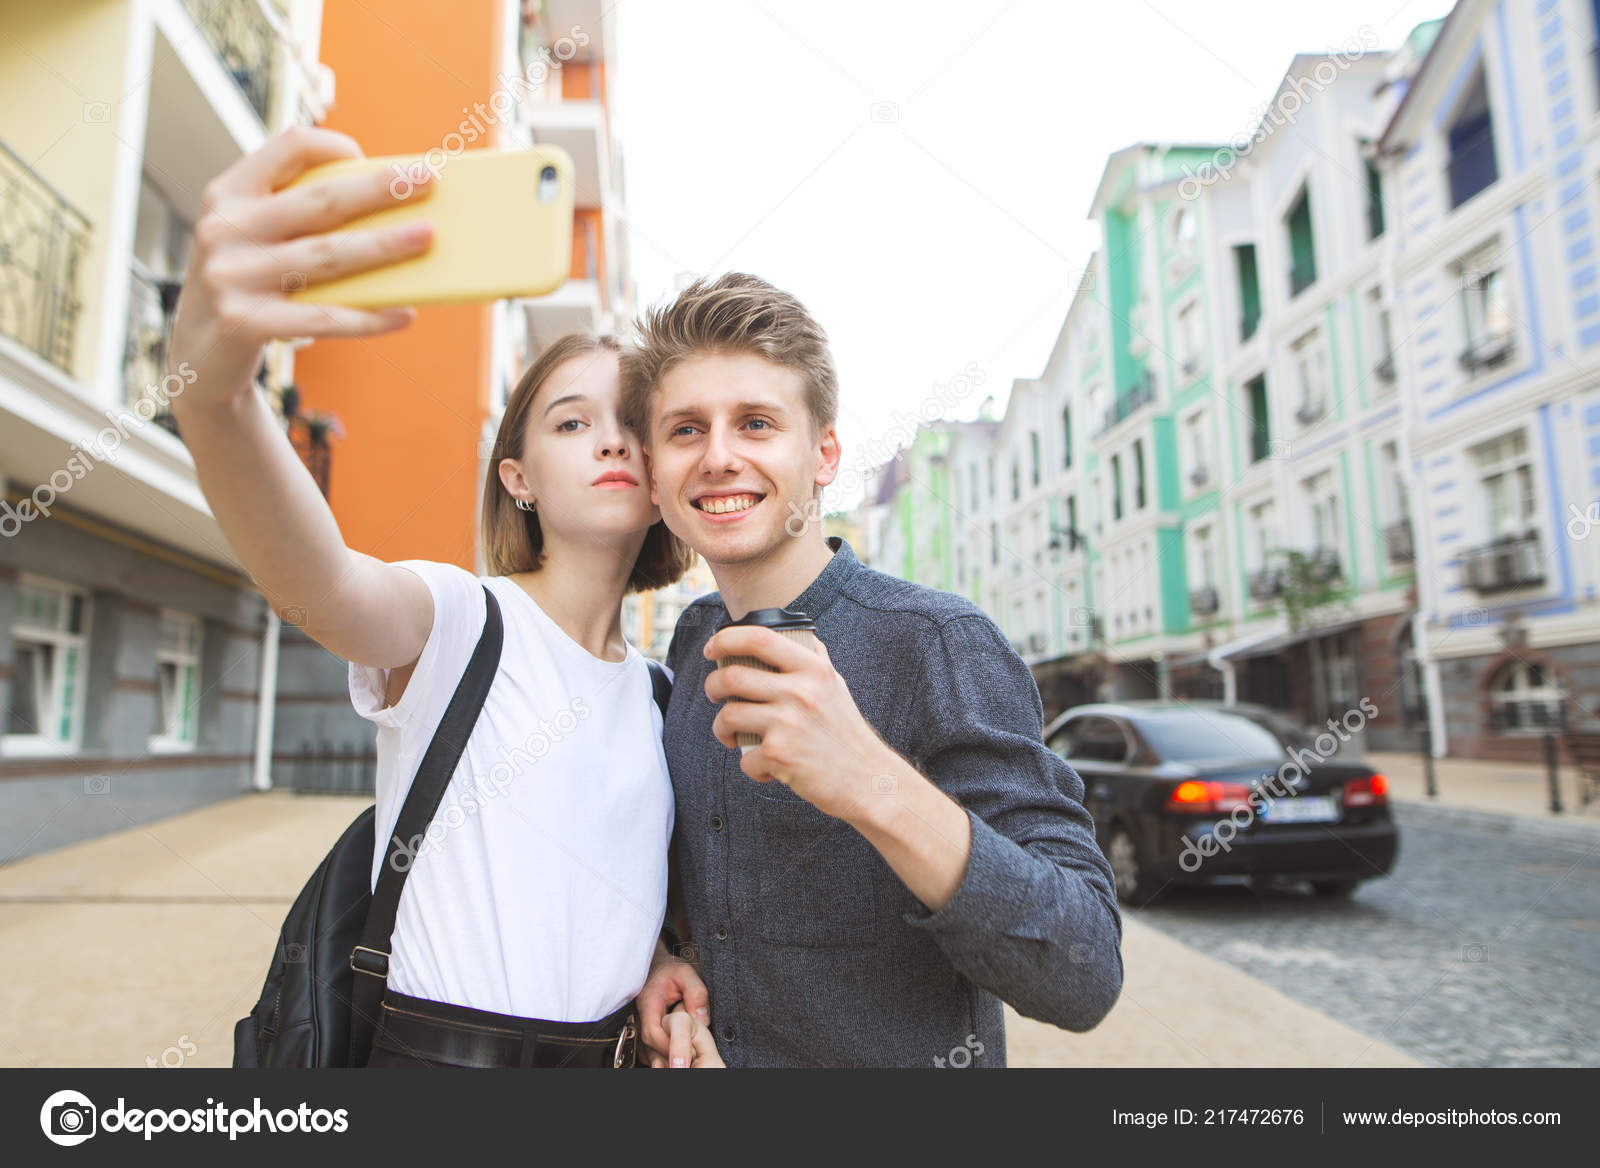 selfie poses | Gallery posted by $ | Lemon8